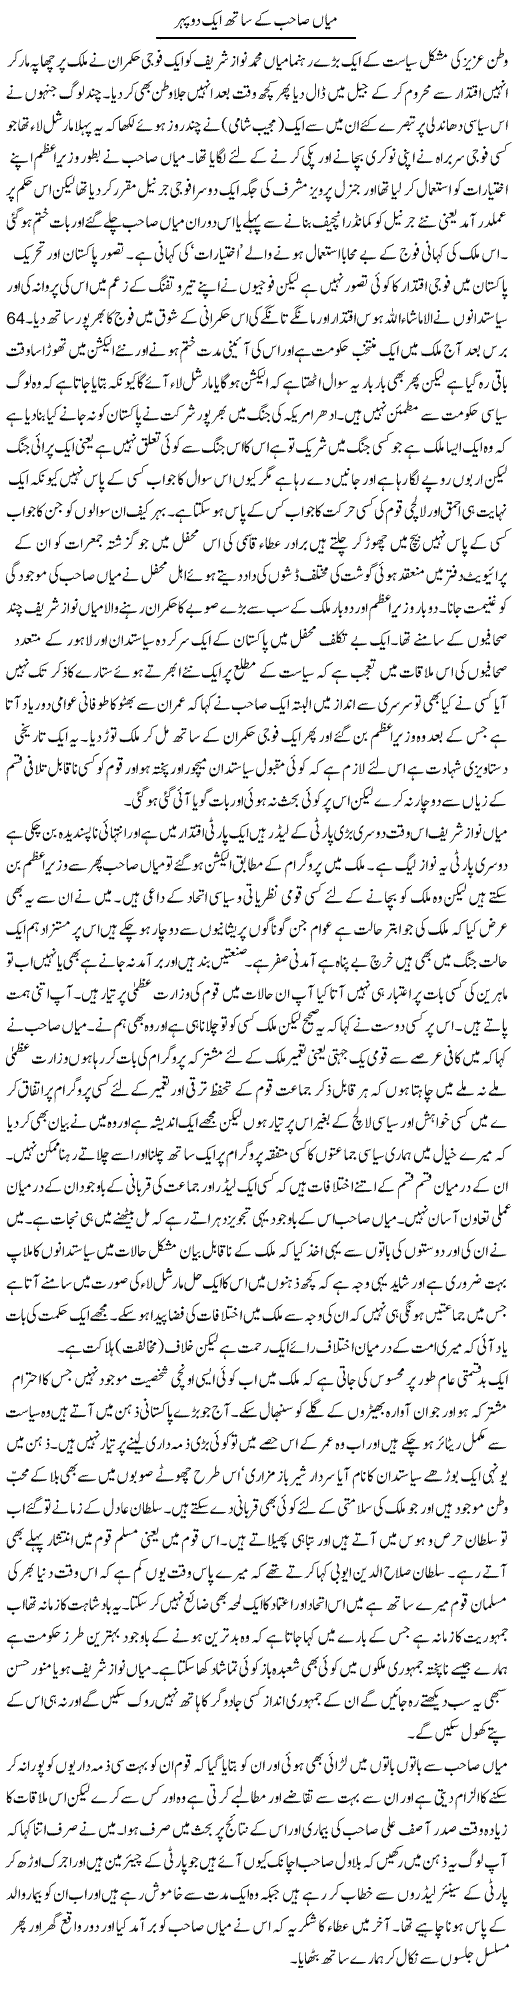 Mian Nawaz Express Column Abdul Qadir 10 December 2011